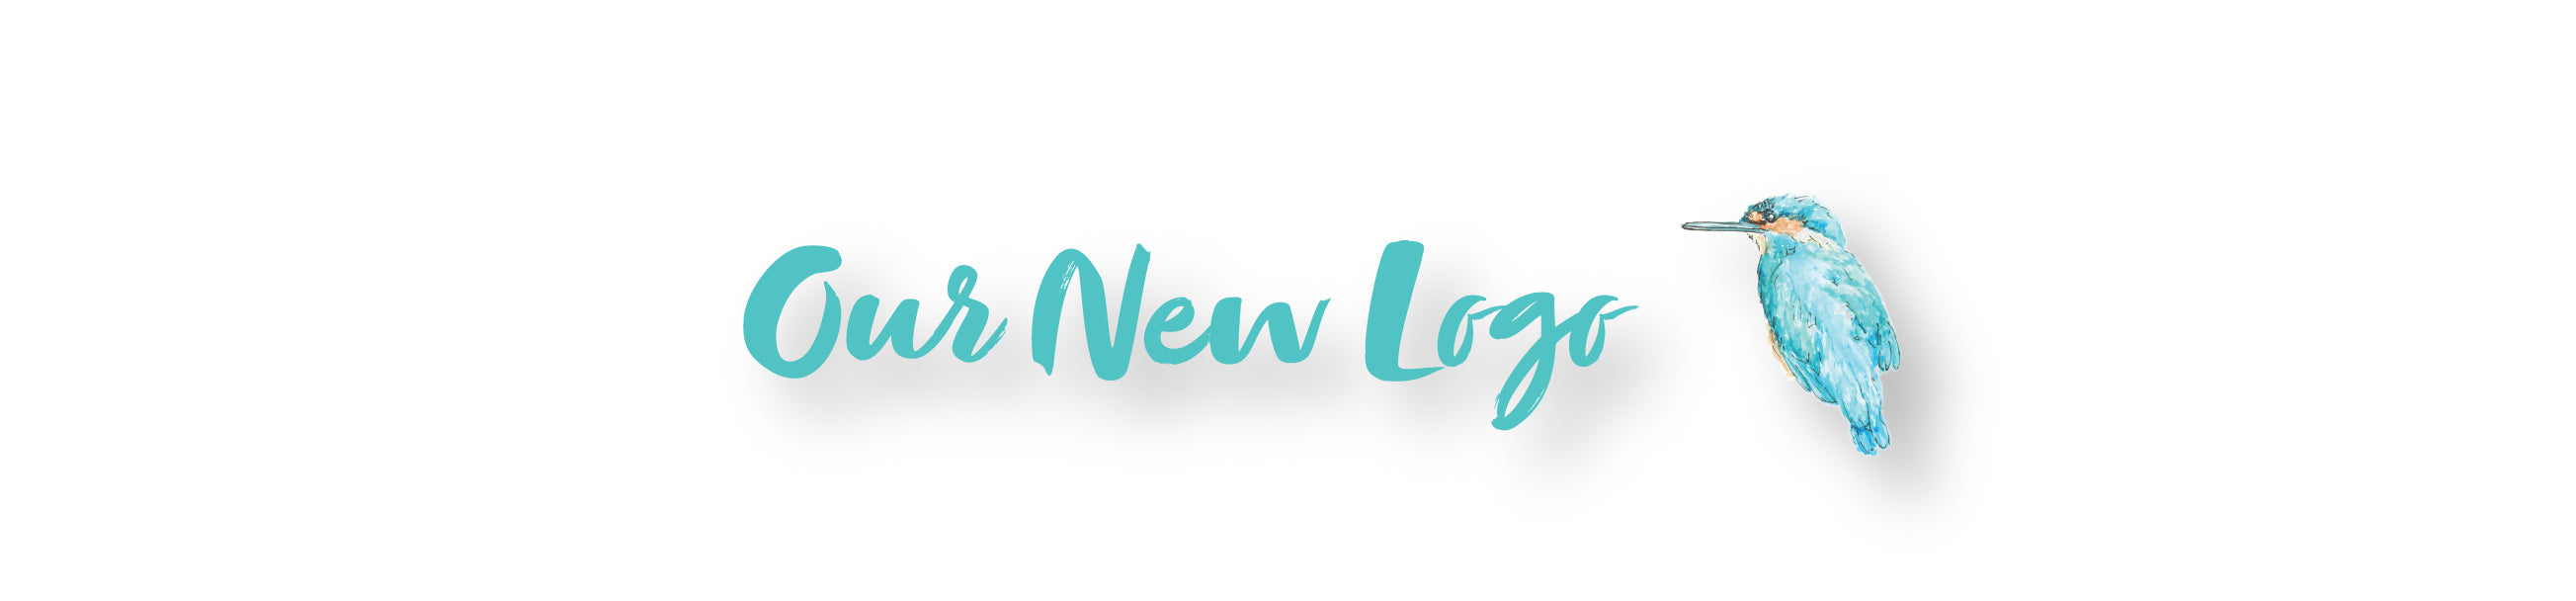 Our New Logo - kingfisher logo bird lol